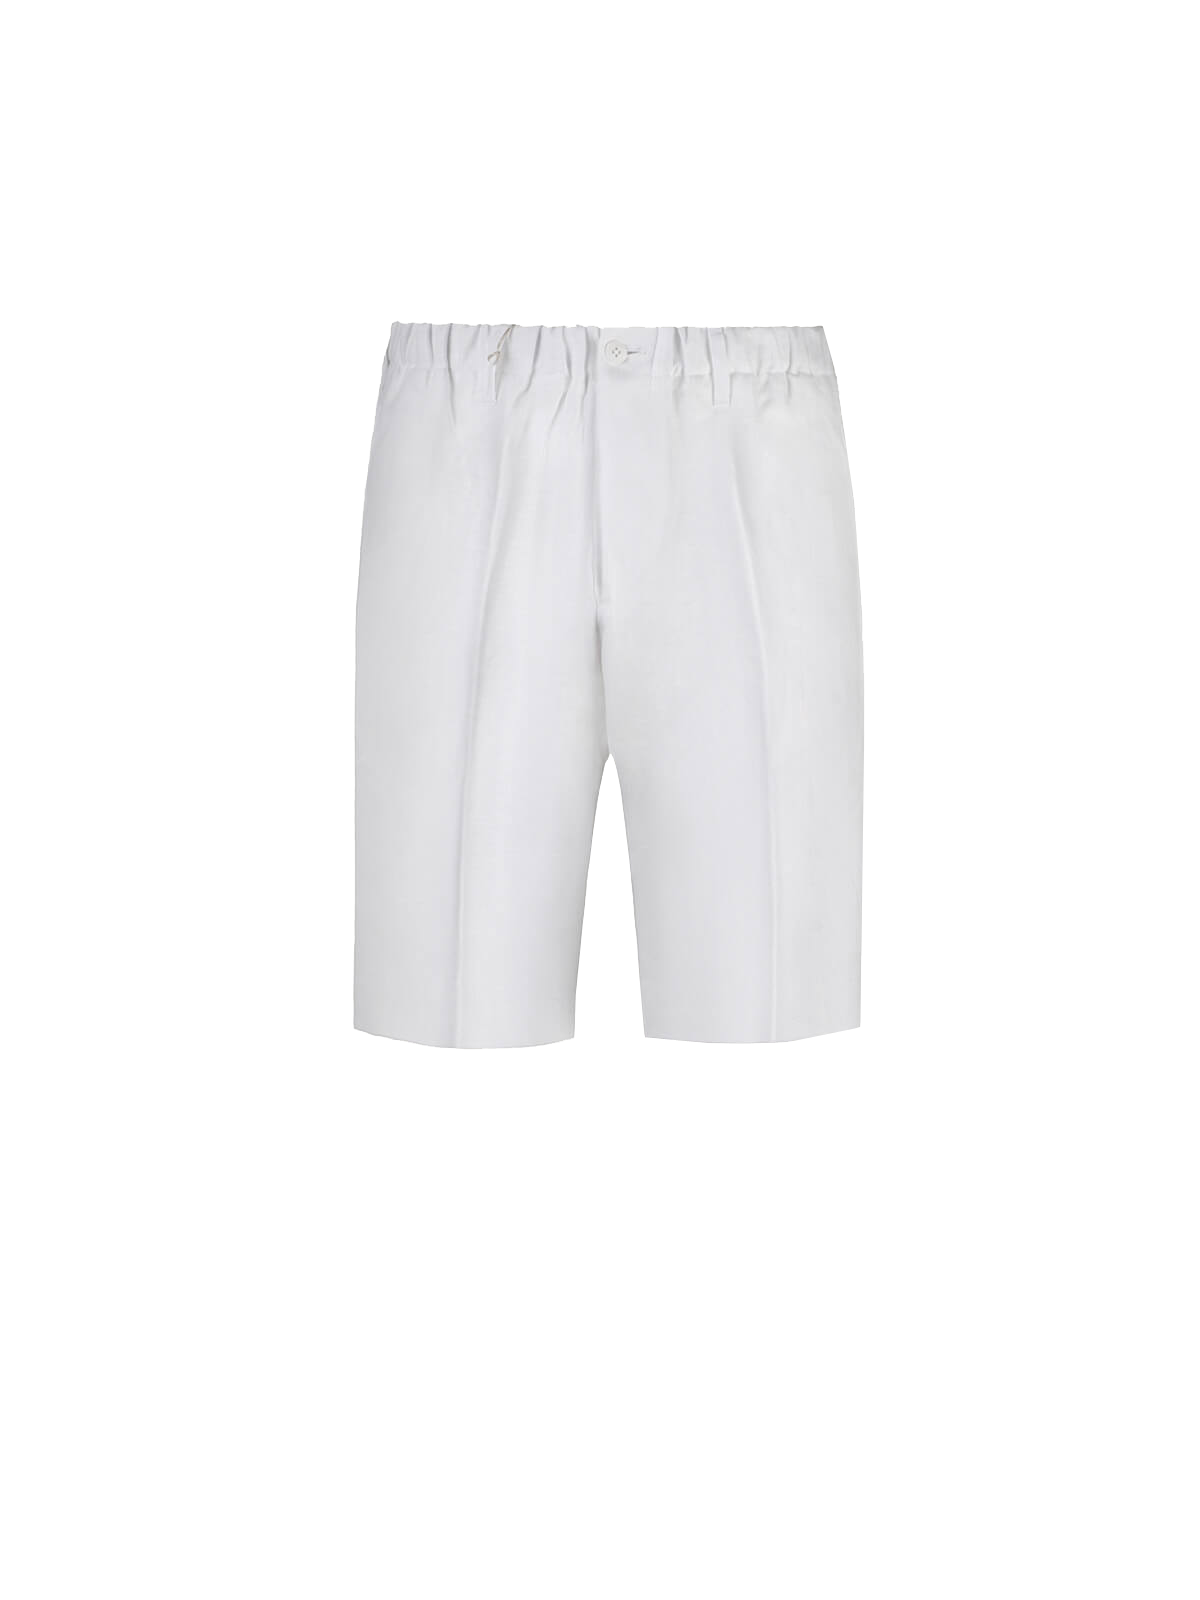 Bermuda Capri for men 100% Capri white linen pant front 